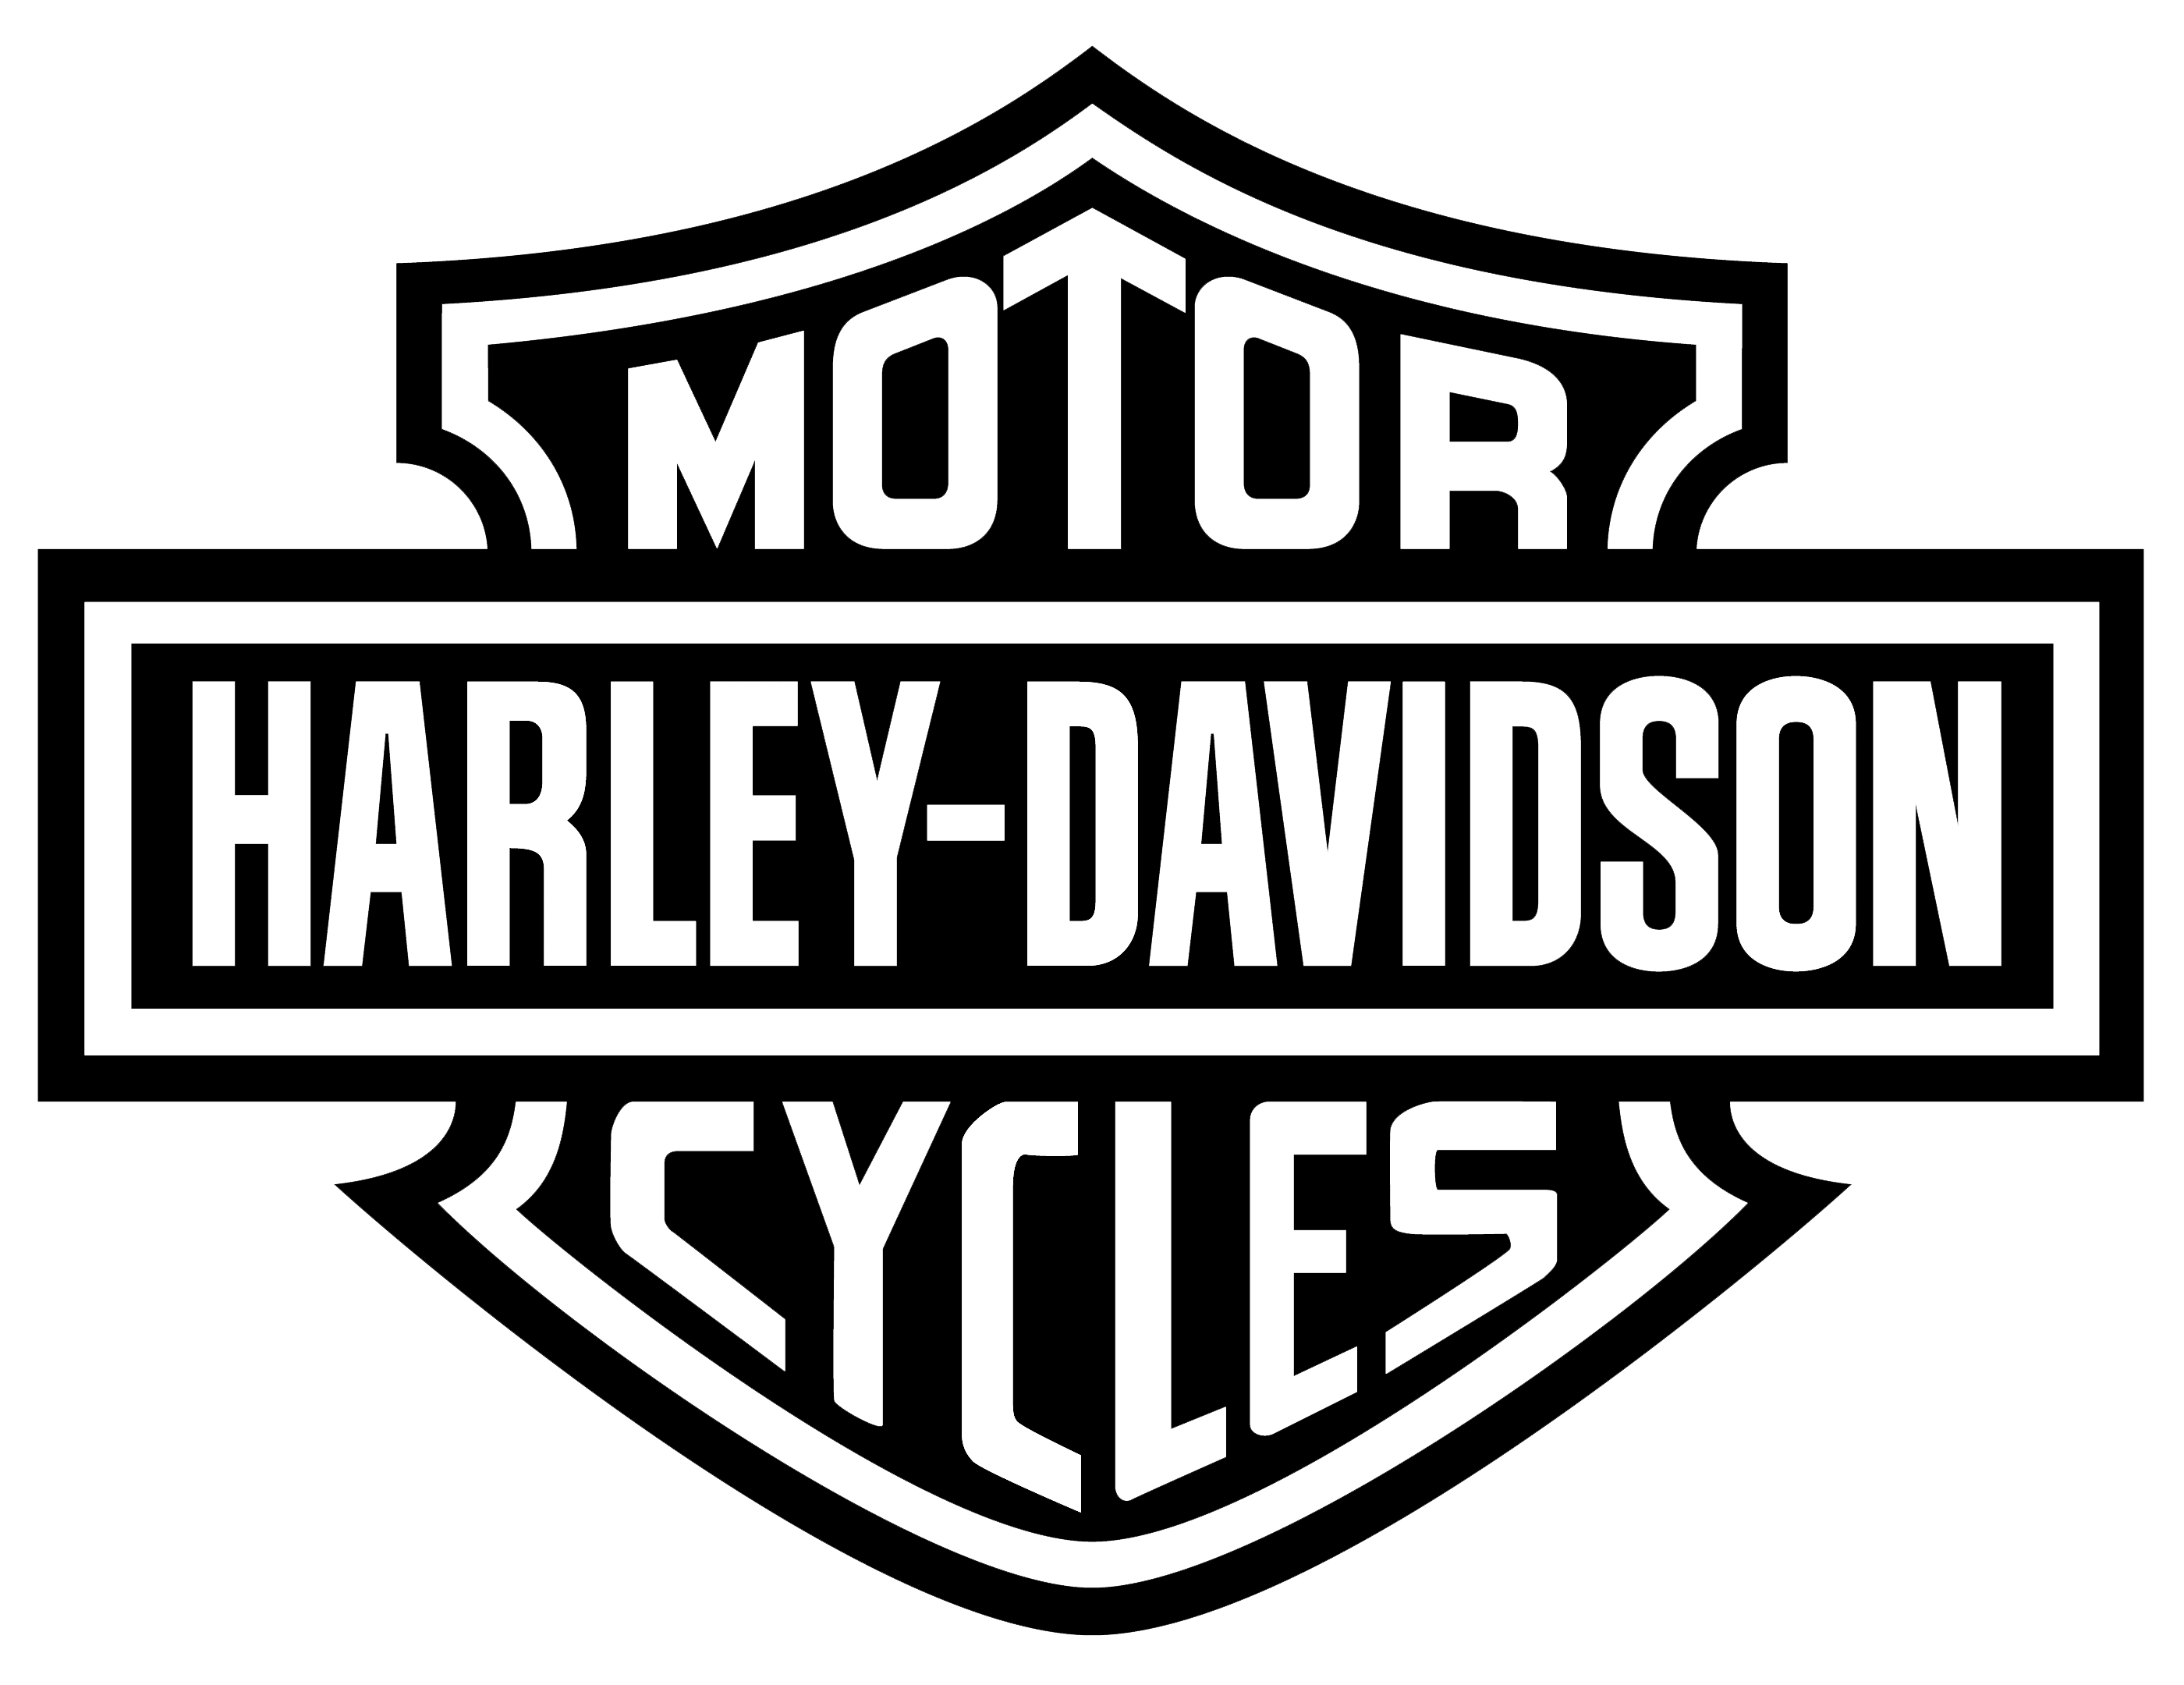 Motorcycle Black and White Brand Logo - Harley-Davidson logo | Motorcycle Brands